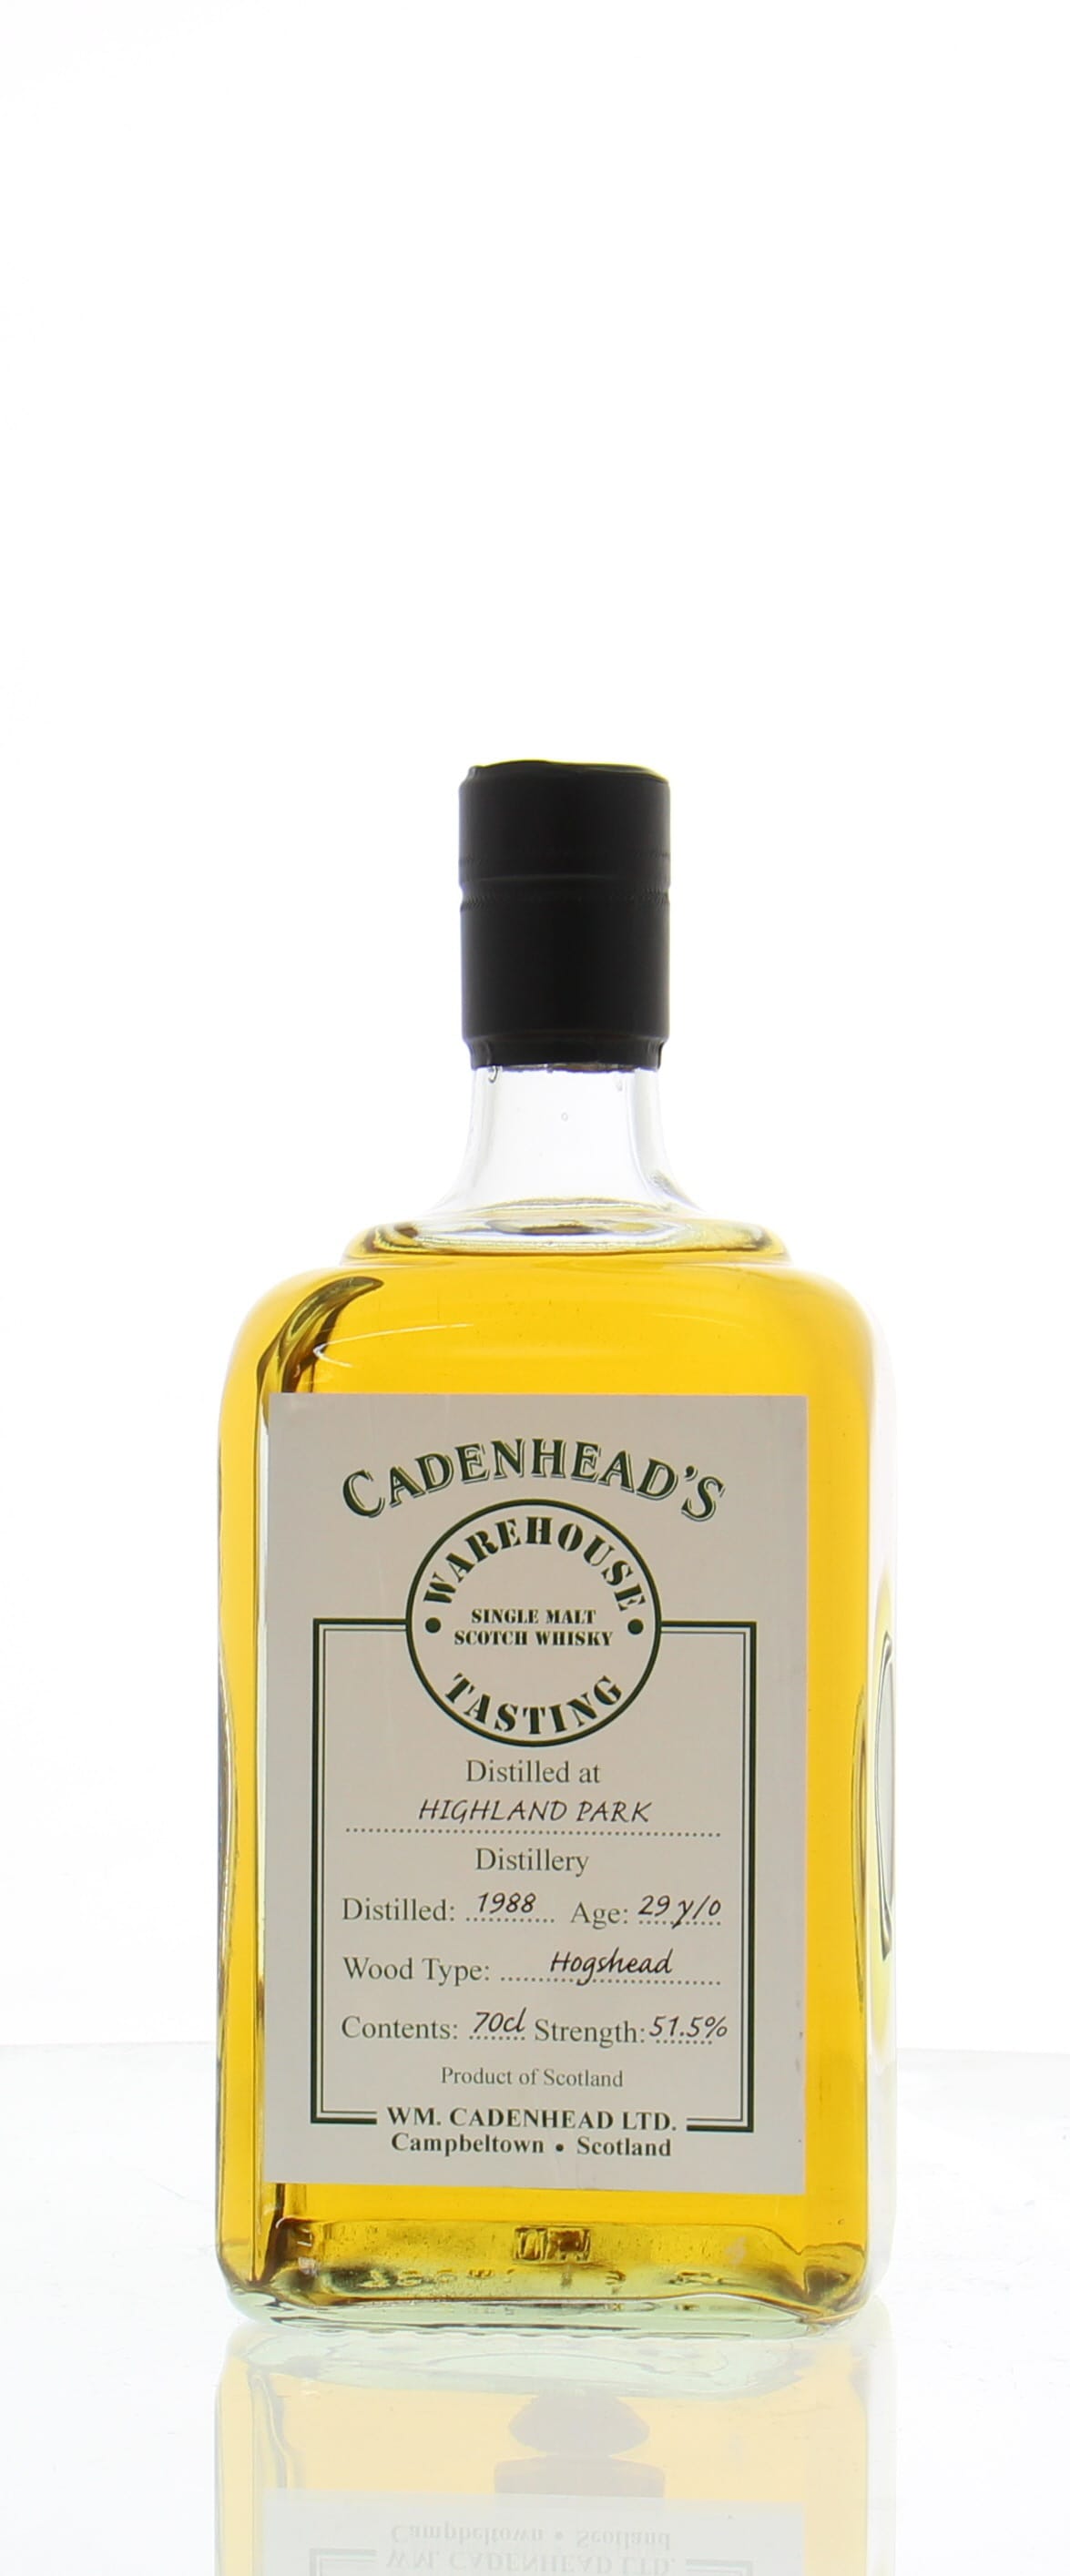 Highland Park - 29 Years Old Cadenhead's Warehouse Tasting 51.5% 1988 Perfect